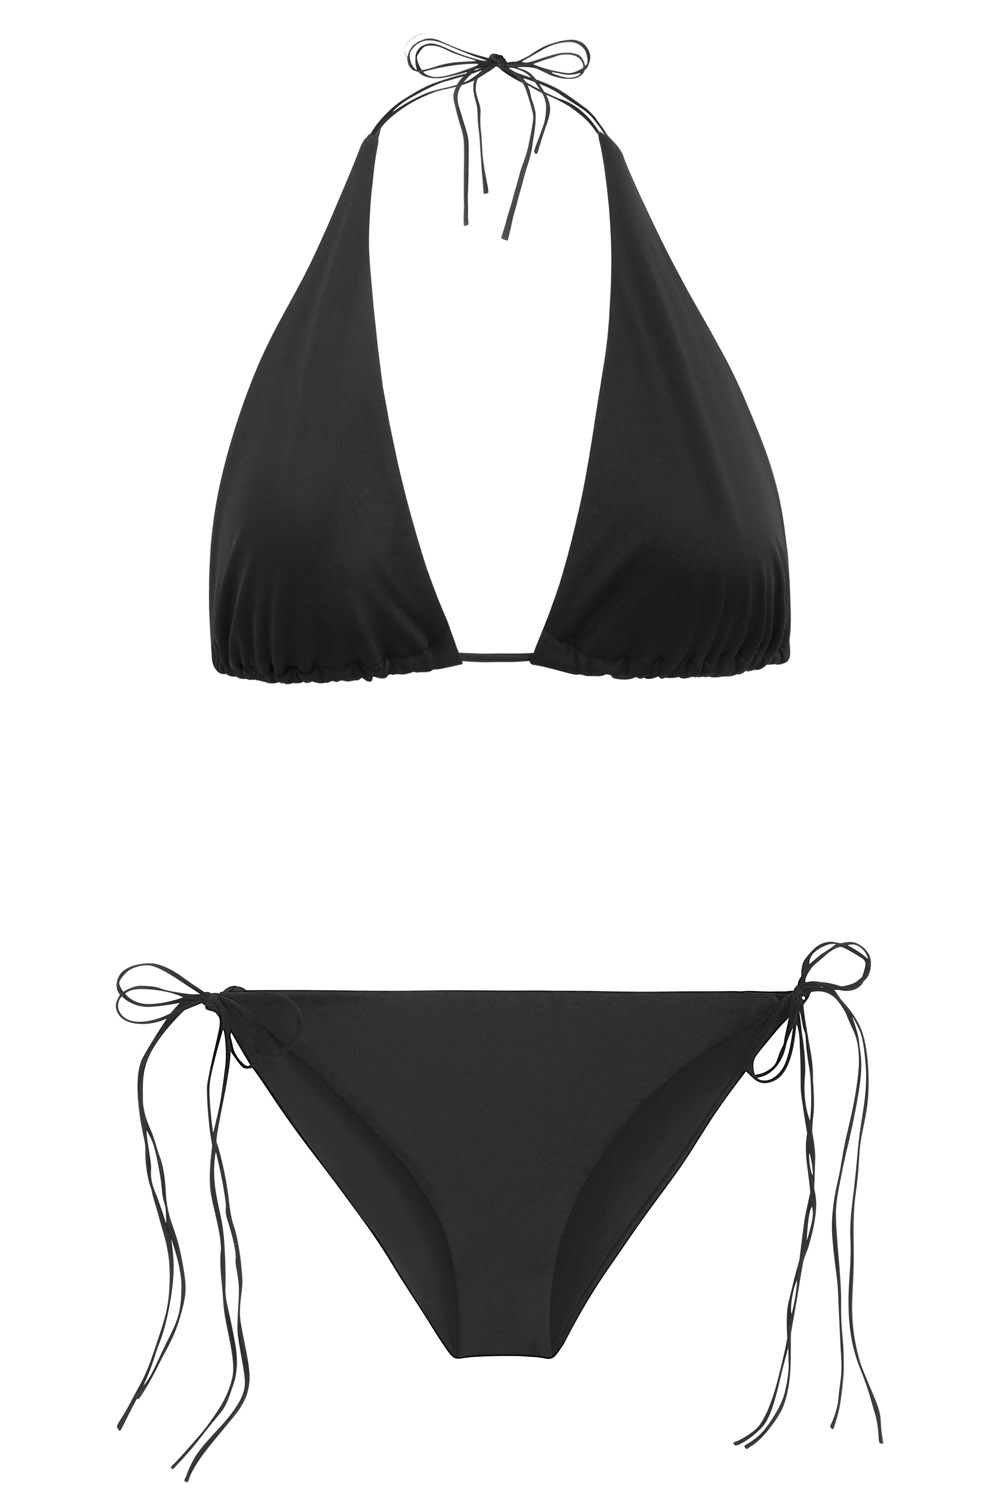 Sustainable Luxury Swimwear / Ropa de baño sostenible, eco bikini / bikini ecológico. Hermigua + St.John in black, by NOW_THEN